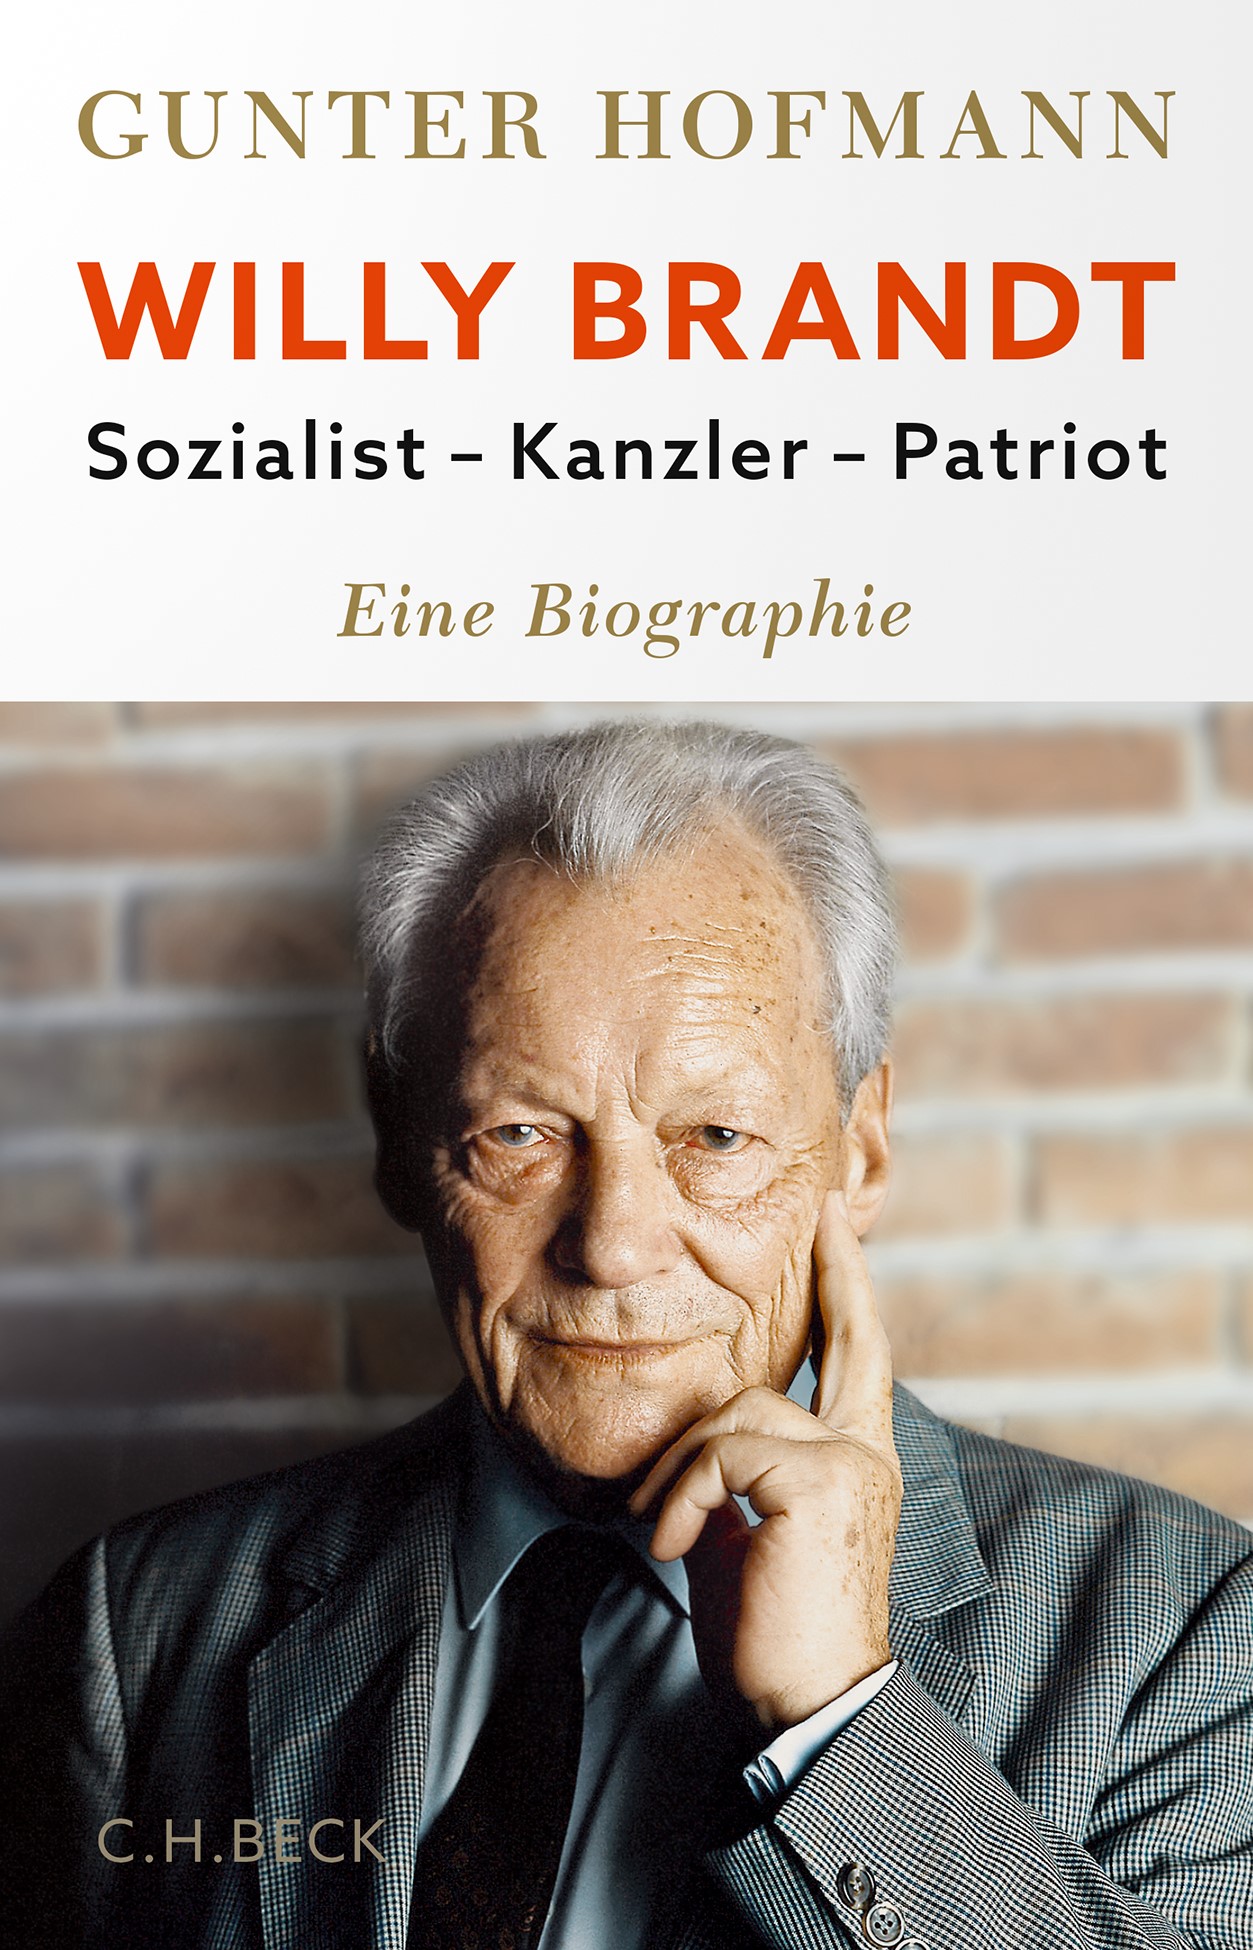 Cover: Hofmann, Gunter, Willy Brandt